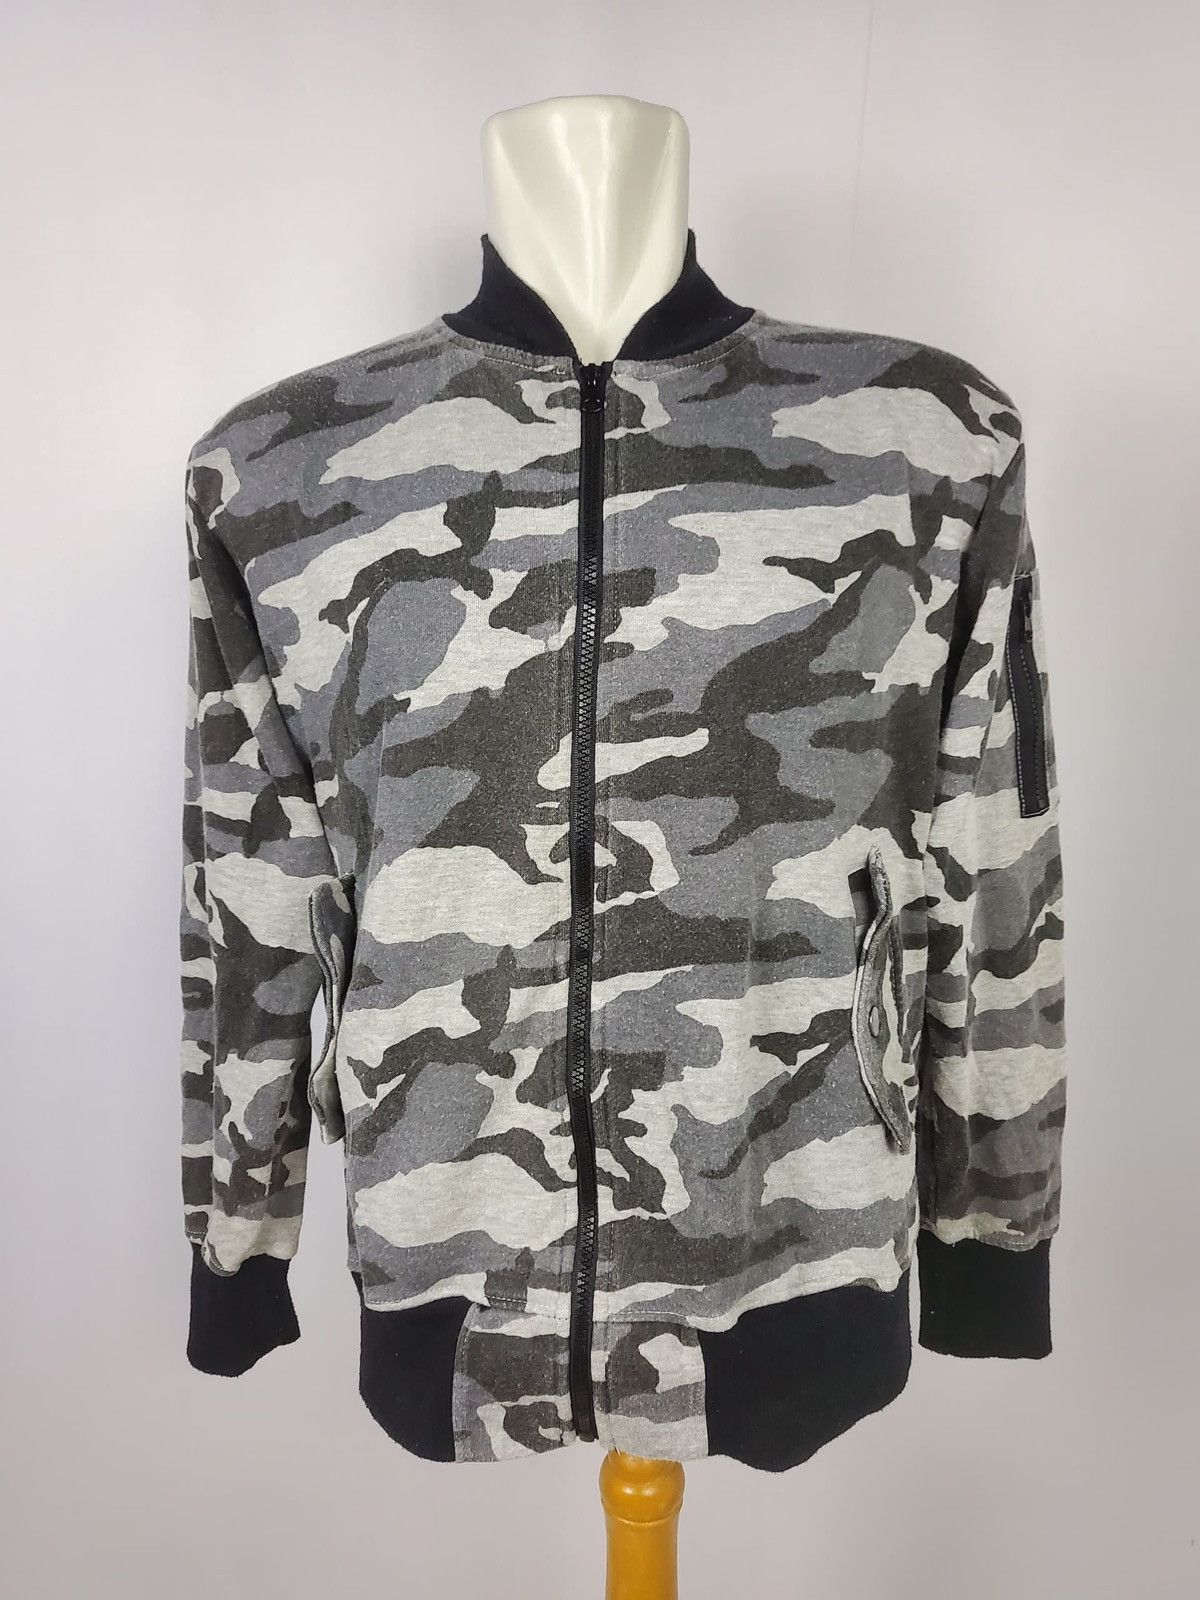 Streetwear Smack Aspiration Army Camouflage Jacket | Grailed